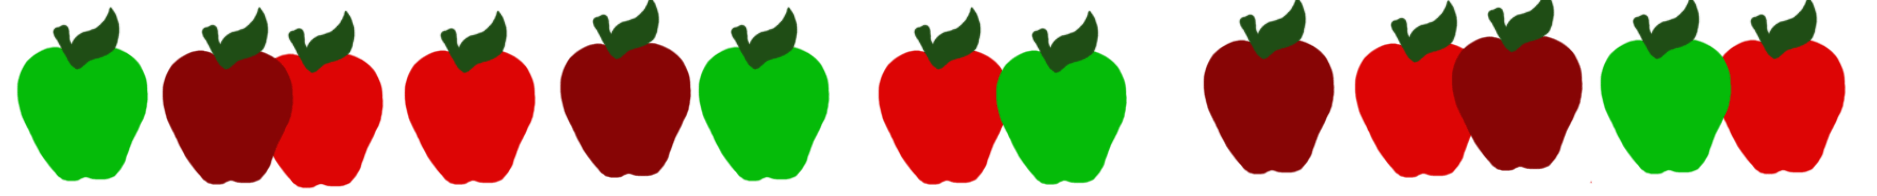 curriculum clipart apple book